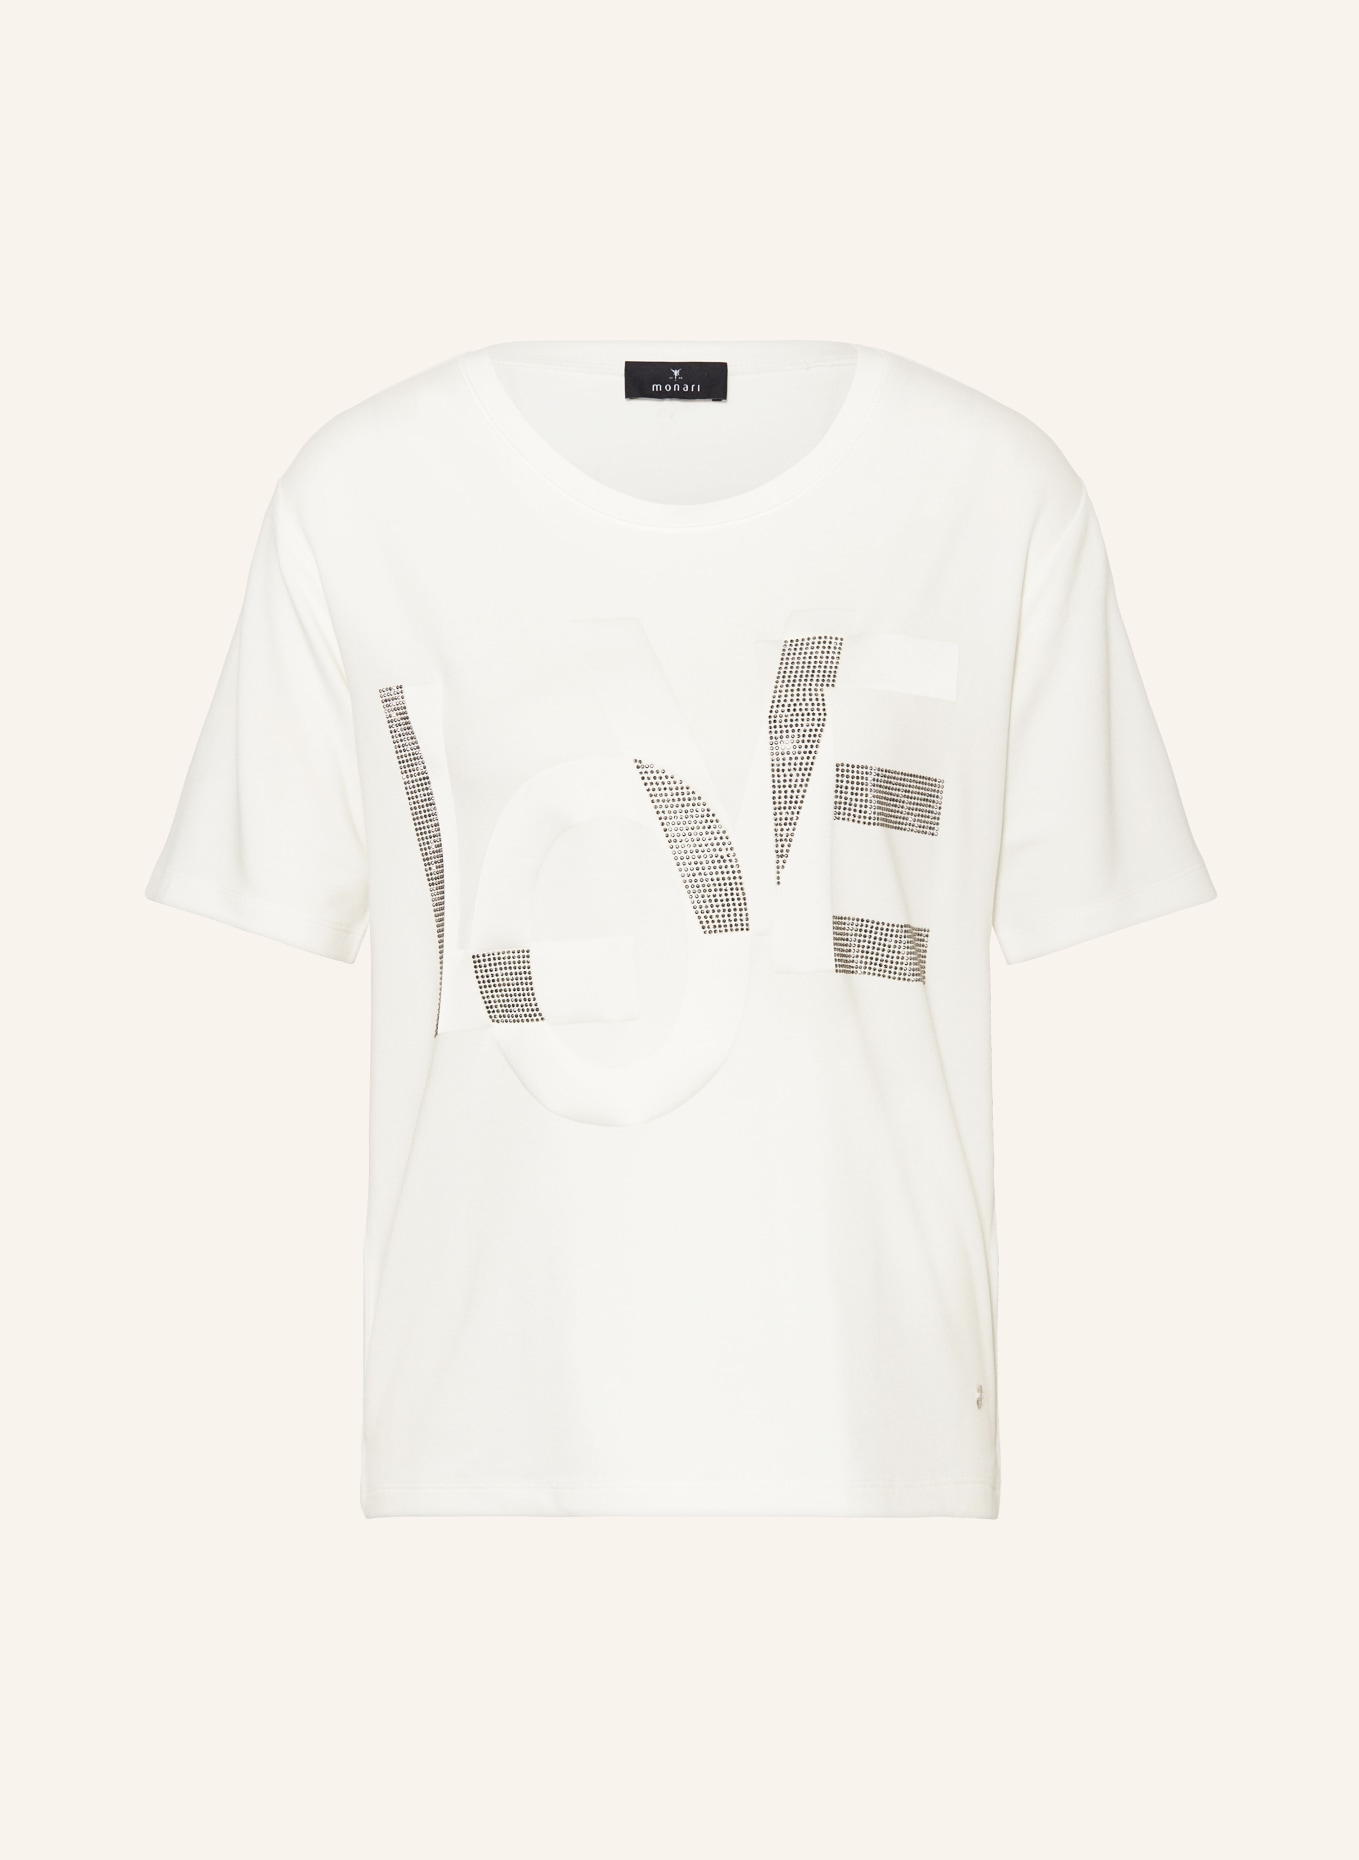 monari T-shirt with decorative gems, Color: WHITE (Image 1)